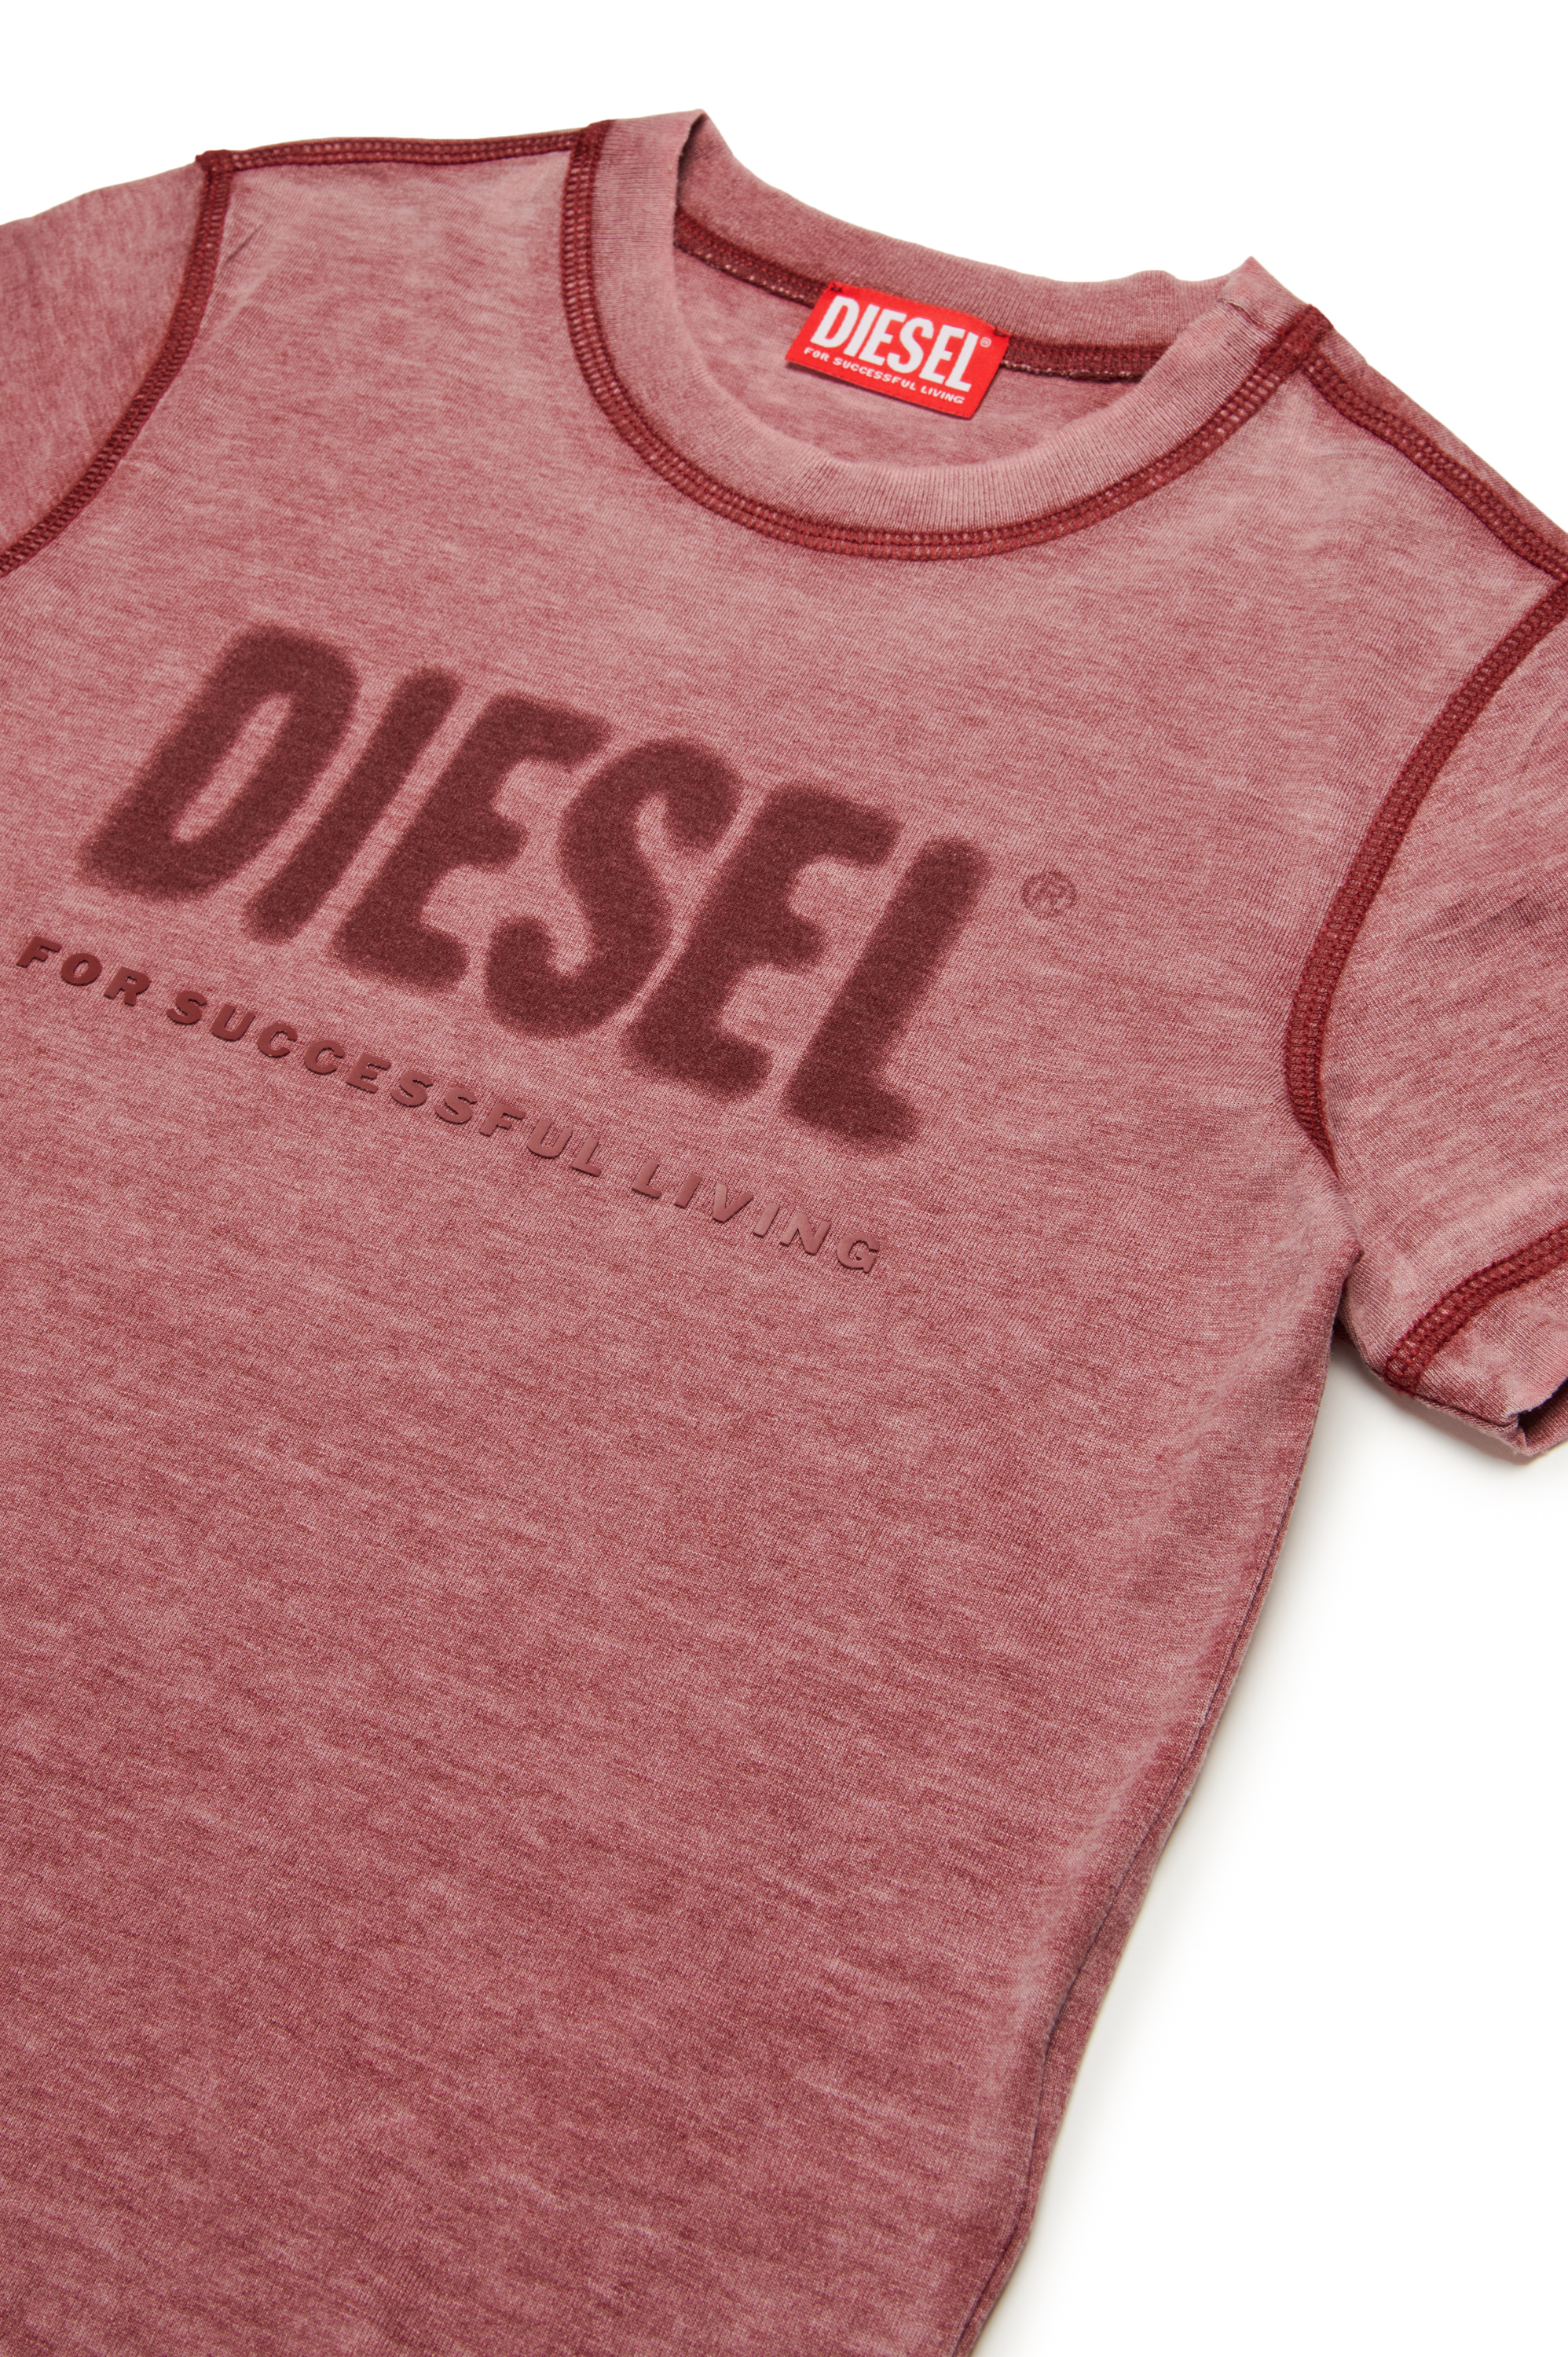 Diesel - TDIEGORL1, Homme T-shirt dévoré avec logo in Rouge - Image 3